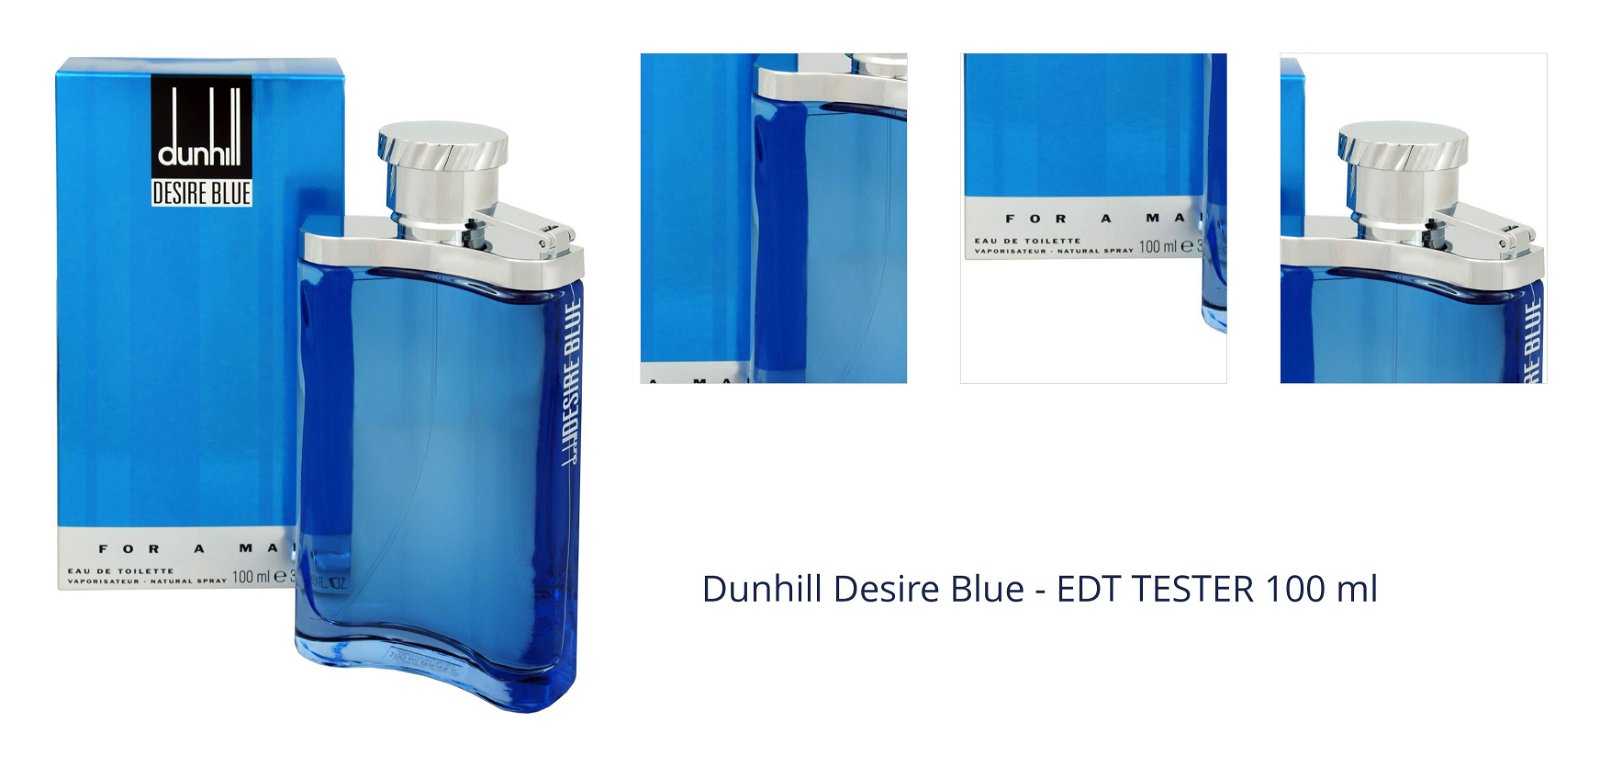 Dunhill Desire Blue - EDT TESTER 100 ml 1